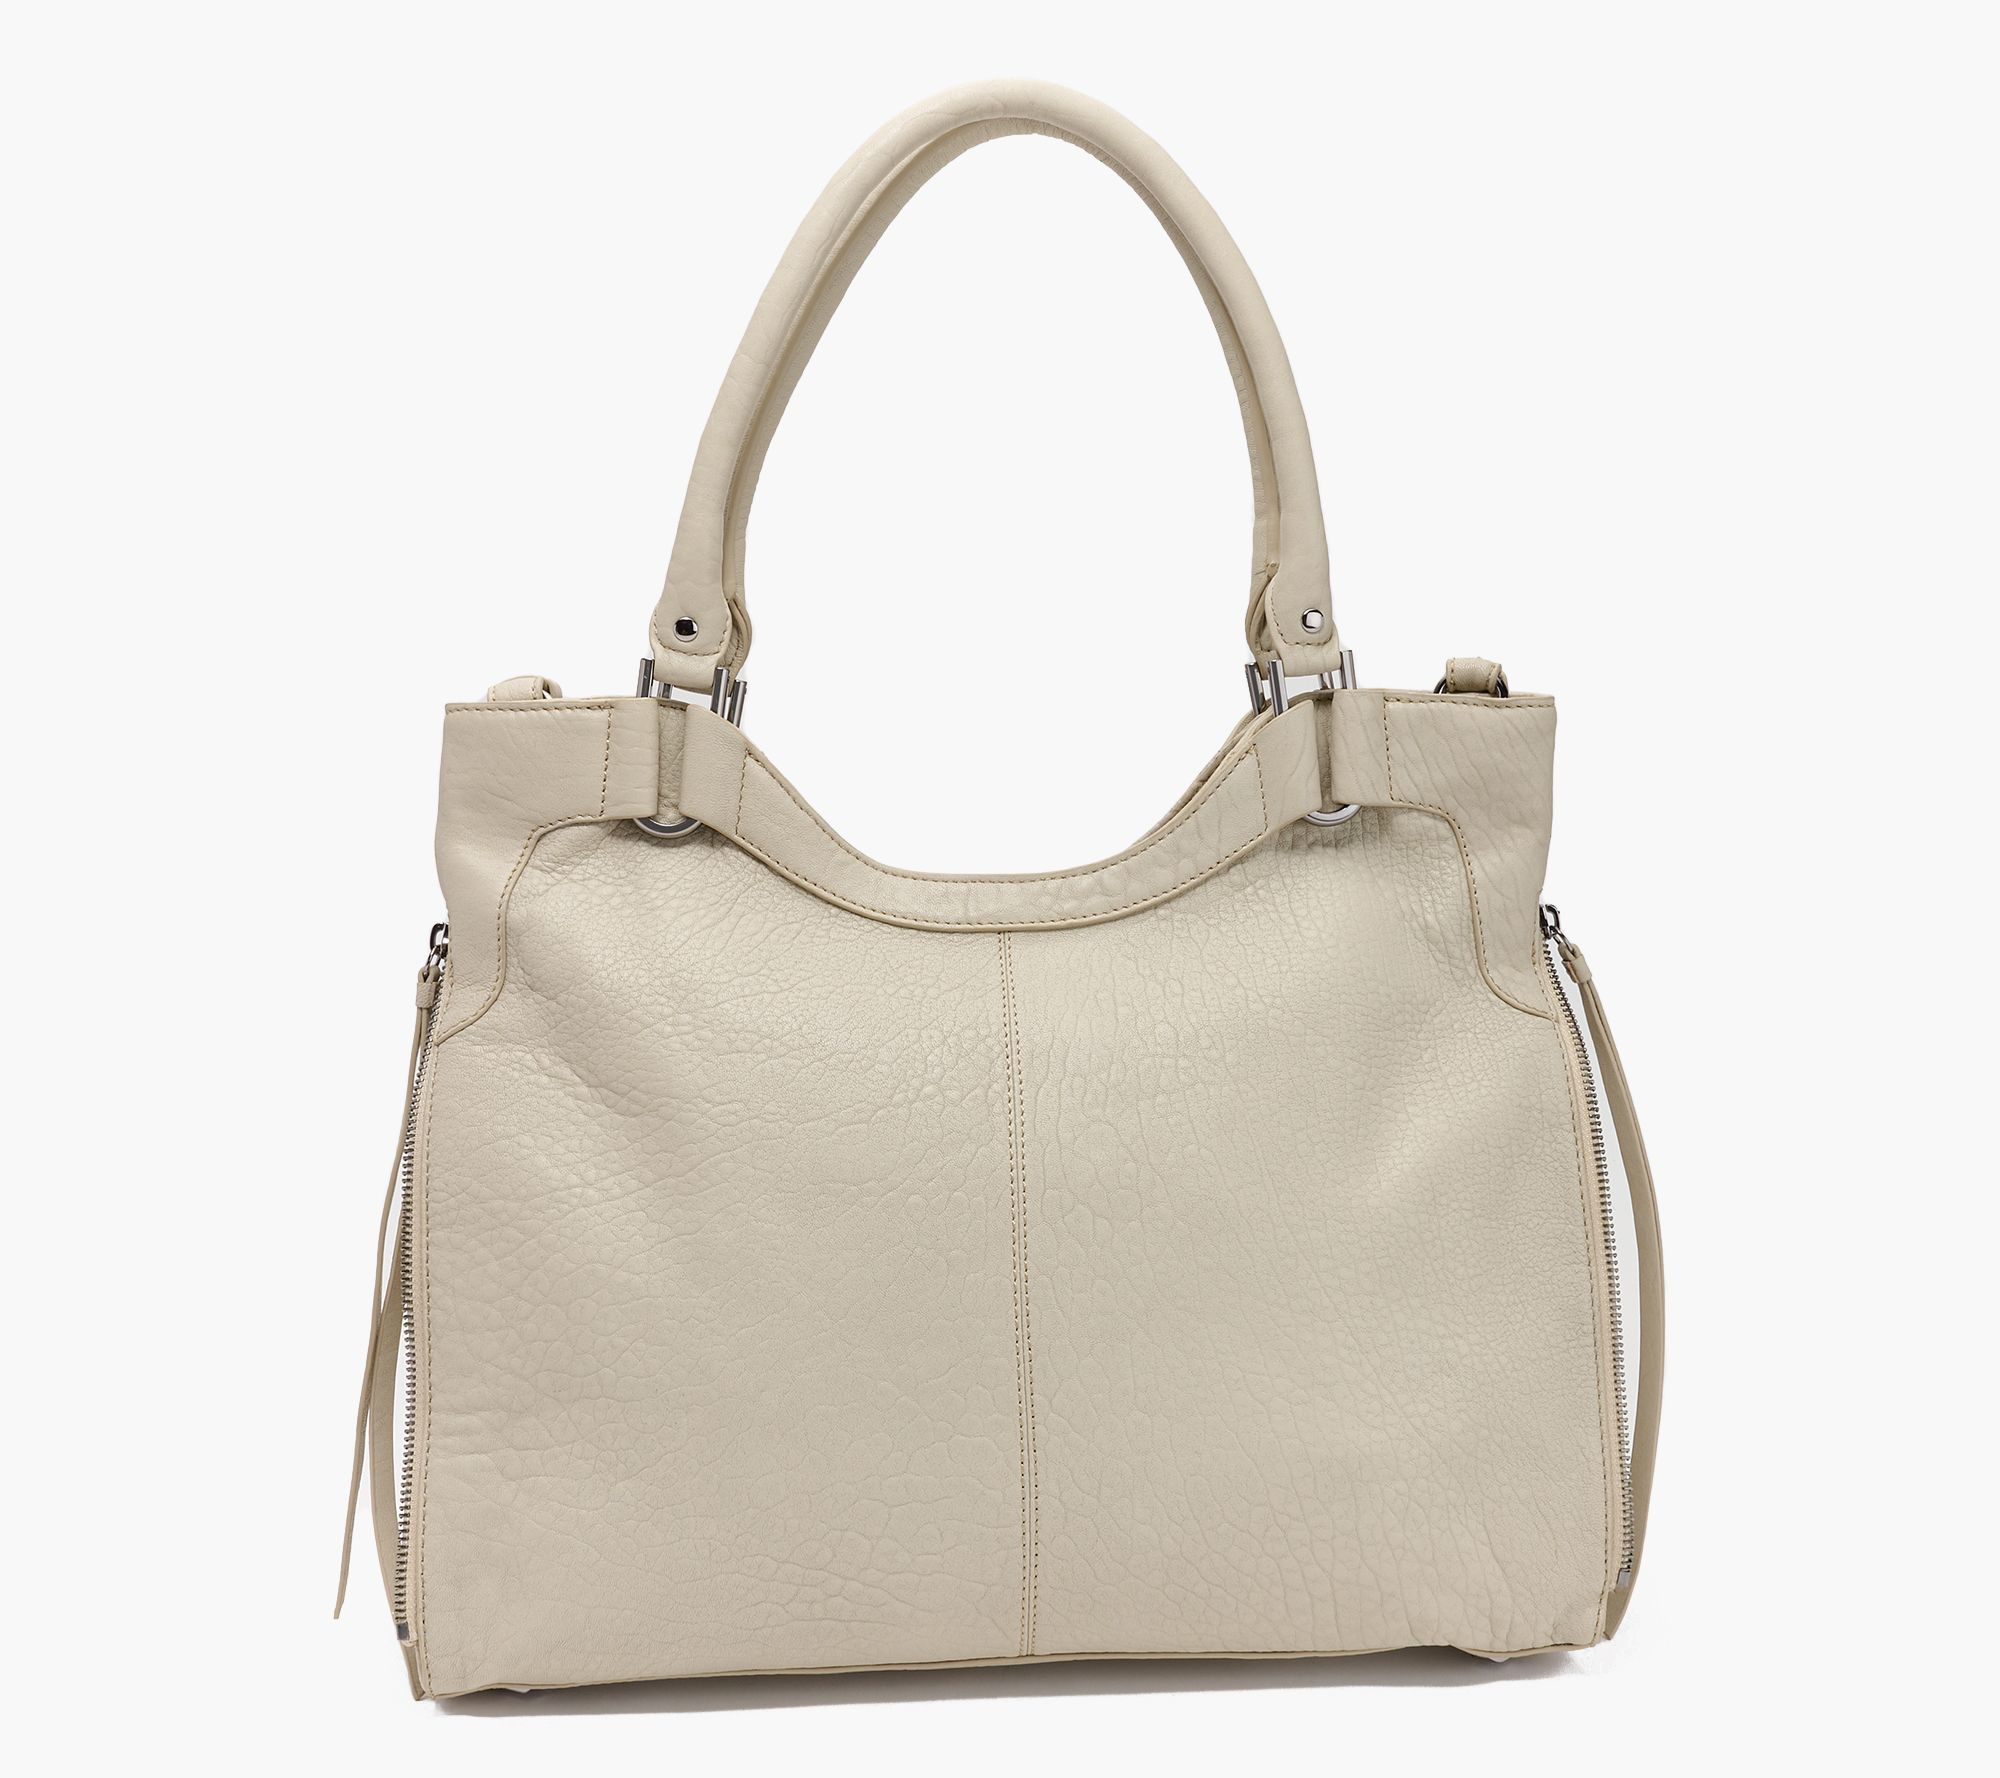 Vince Camuto Women's Corla Tote Handbags - Macy's